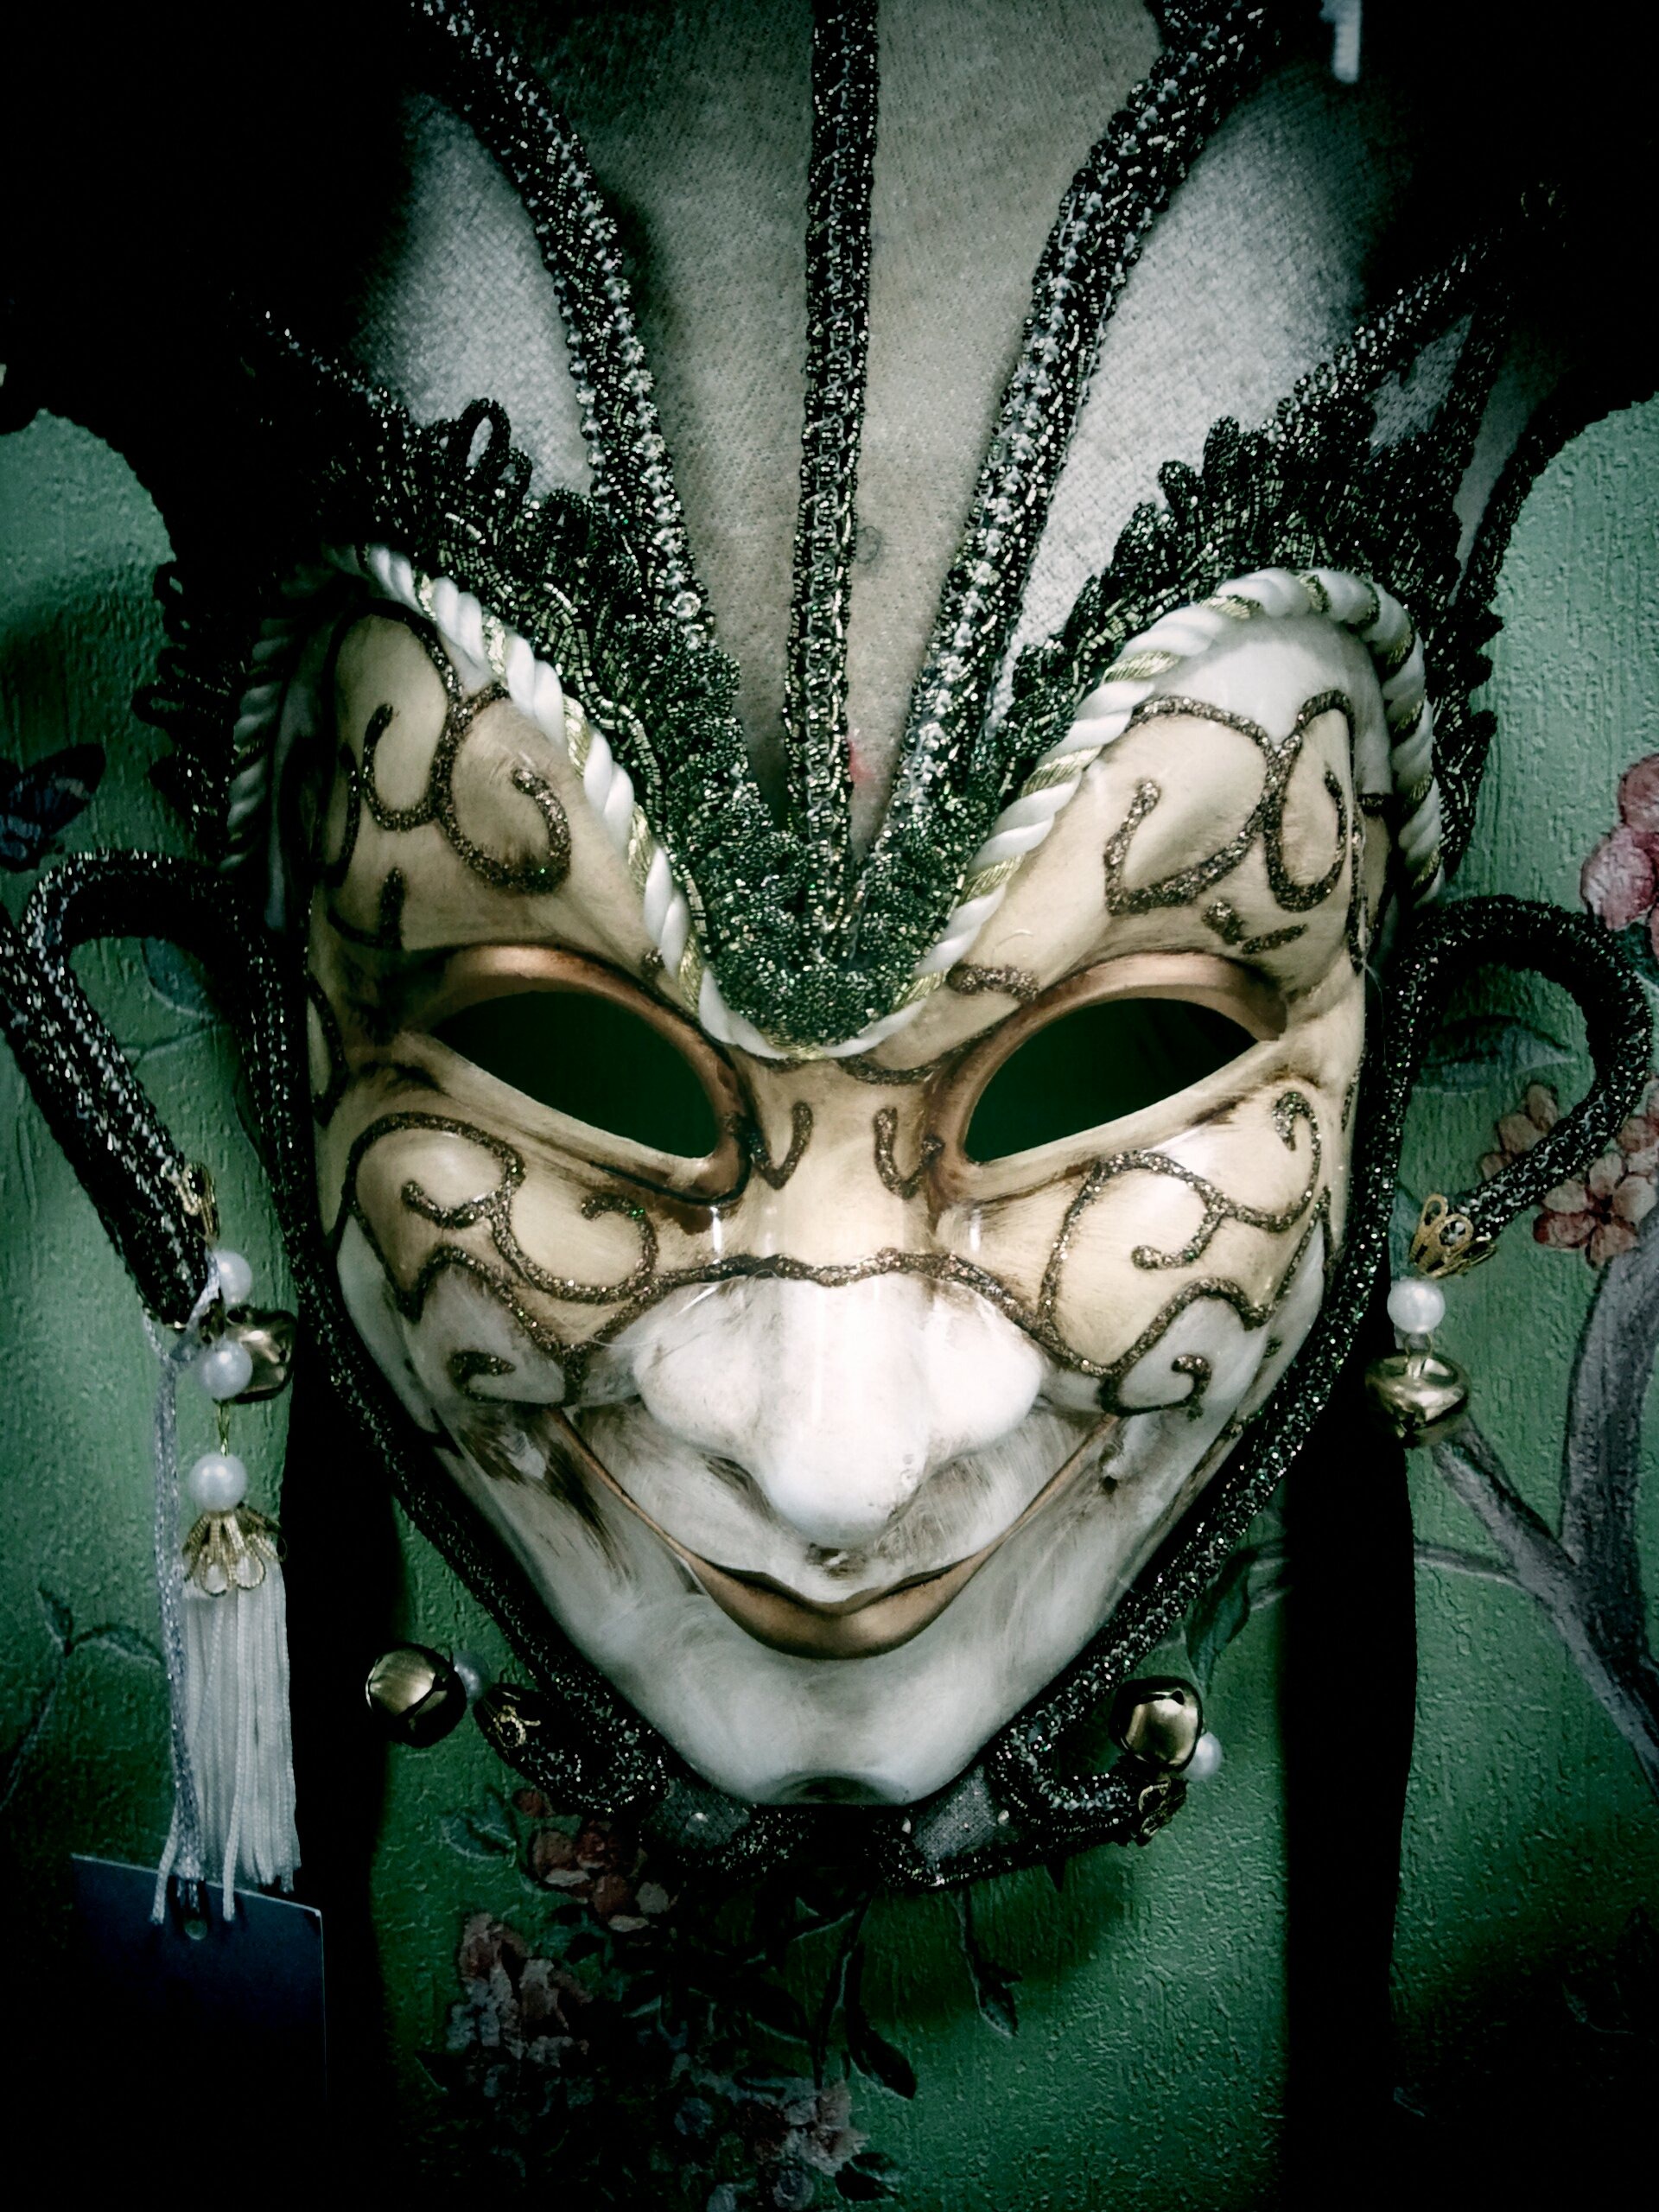 white, gray, and black opera mask, prom, carnival, venice - Italy